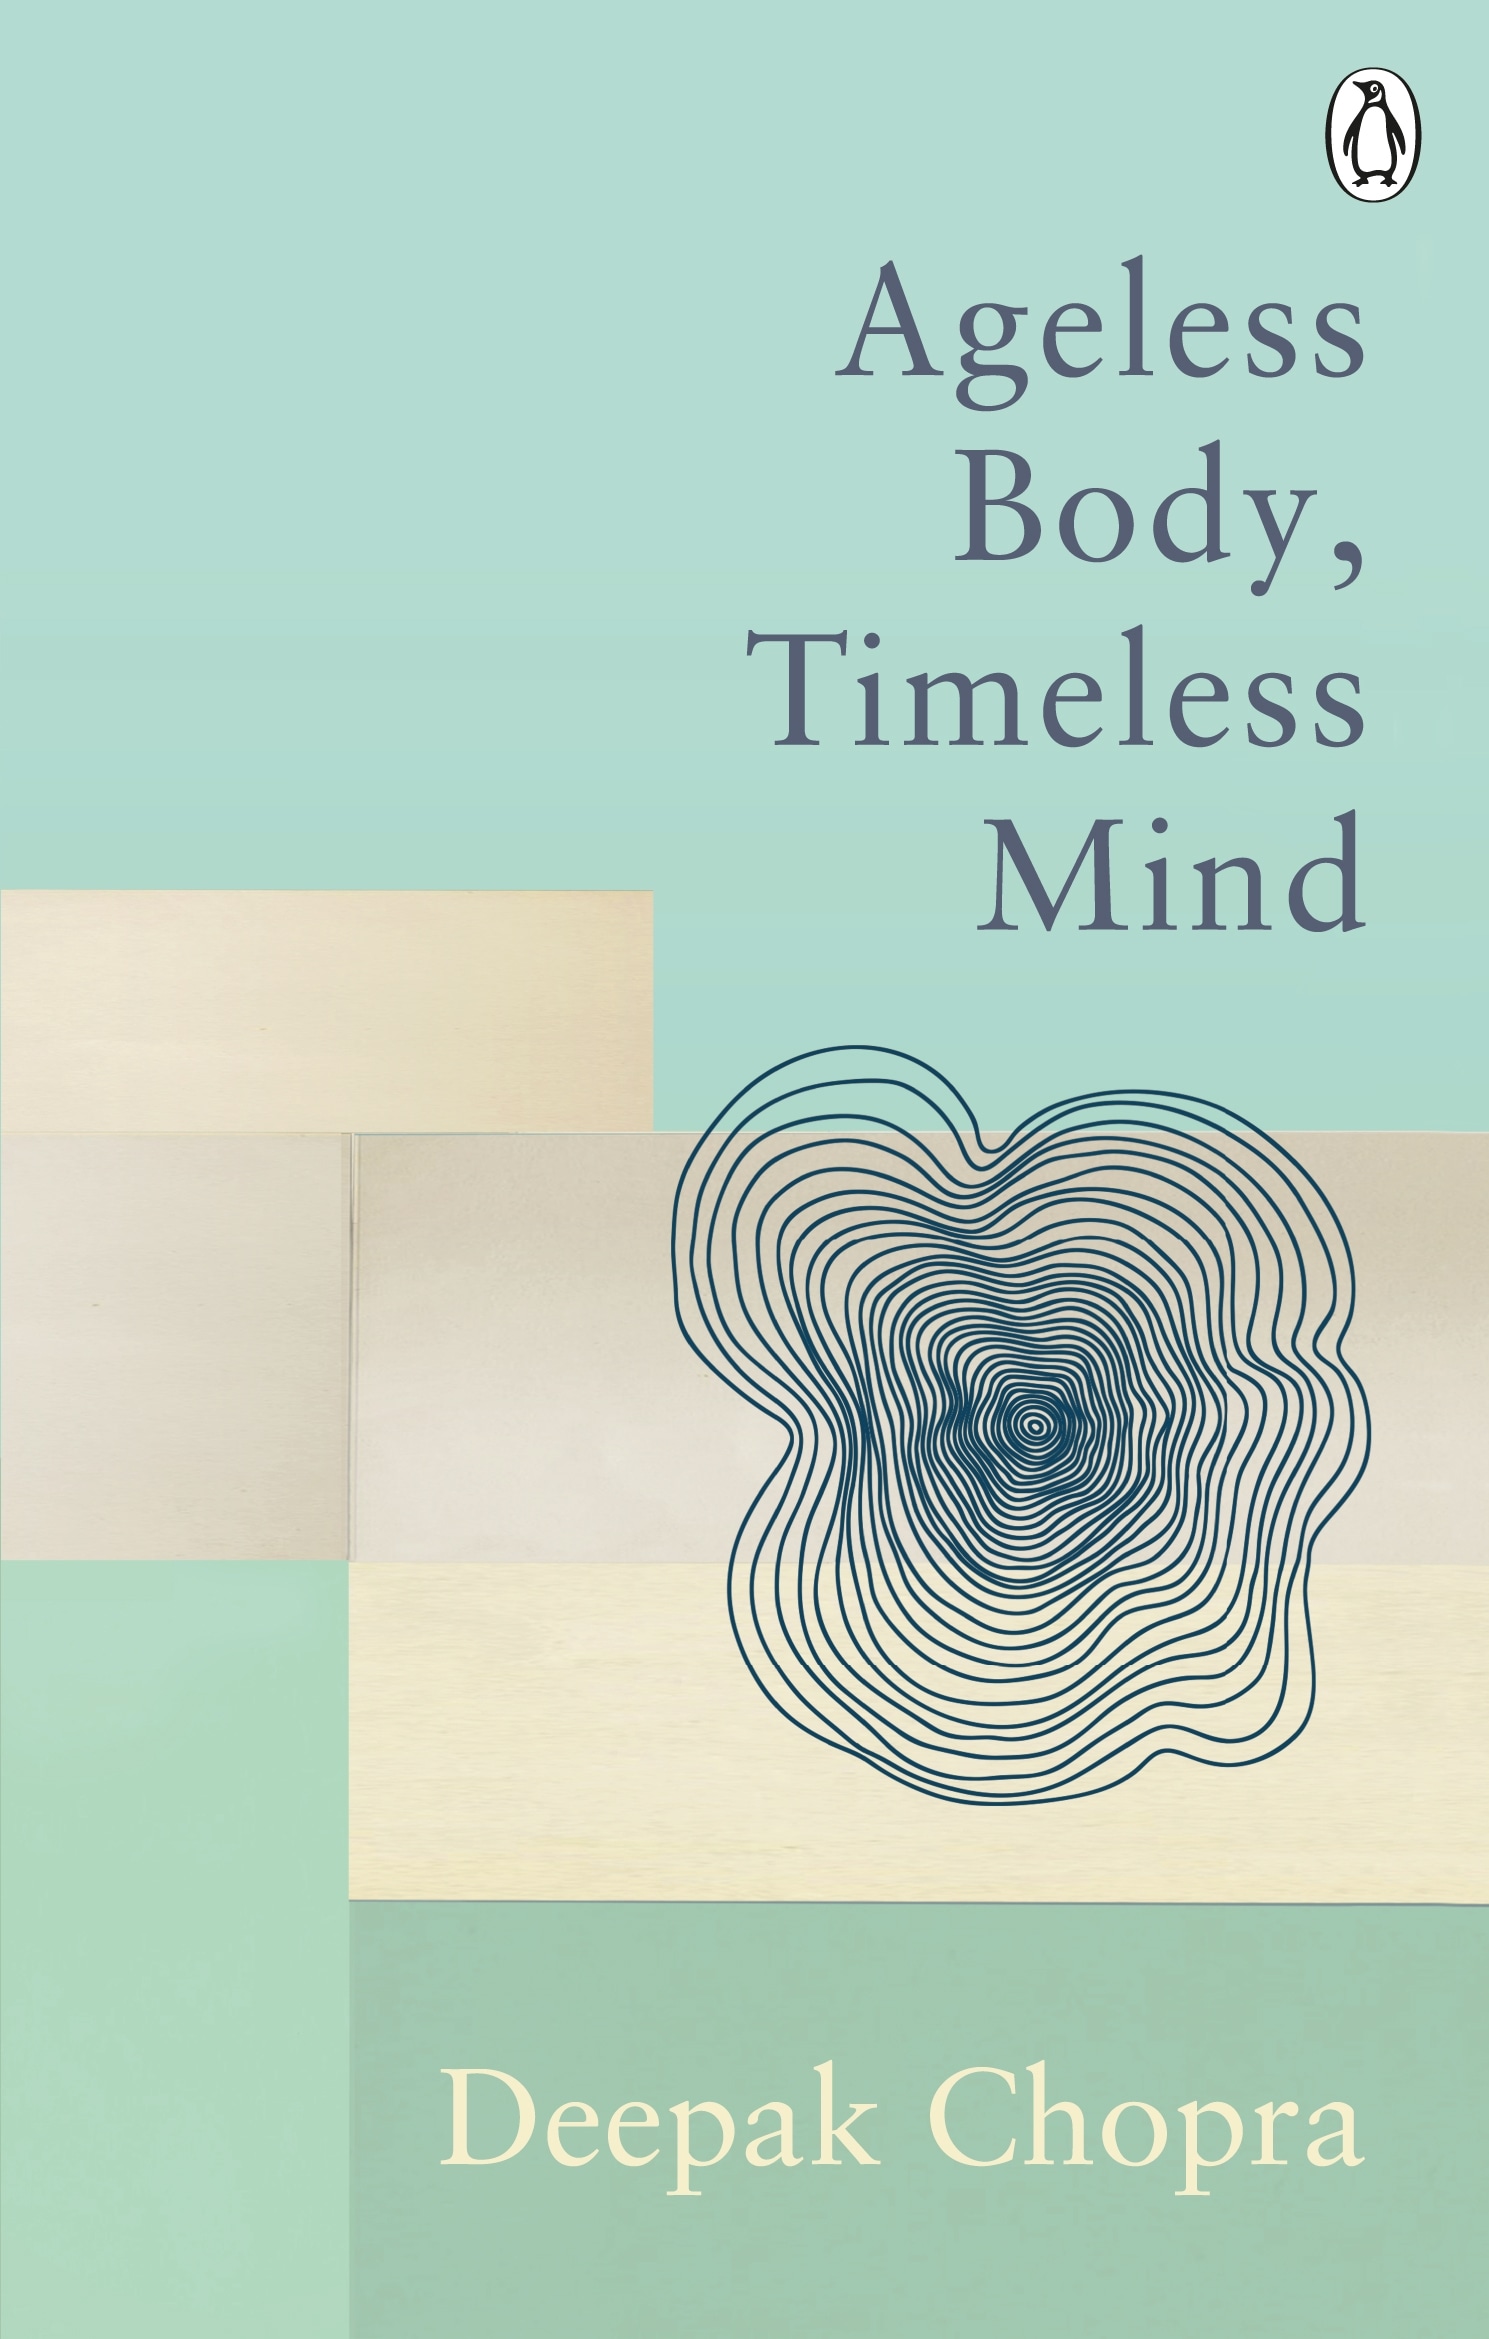 Book “Ageless Body, Timeless Mind” by Deepak Chopra — January 7, 2021